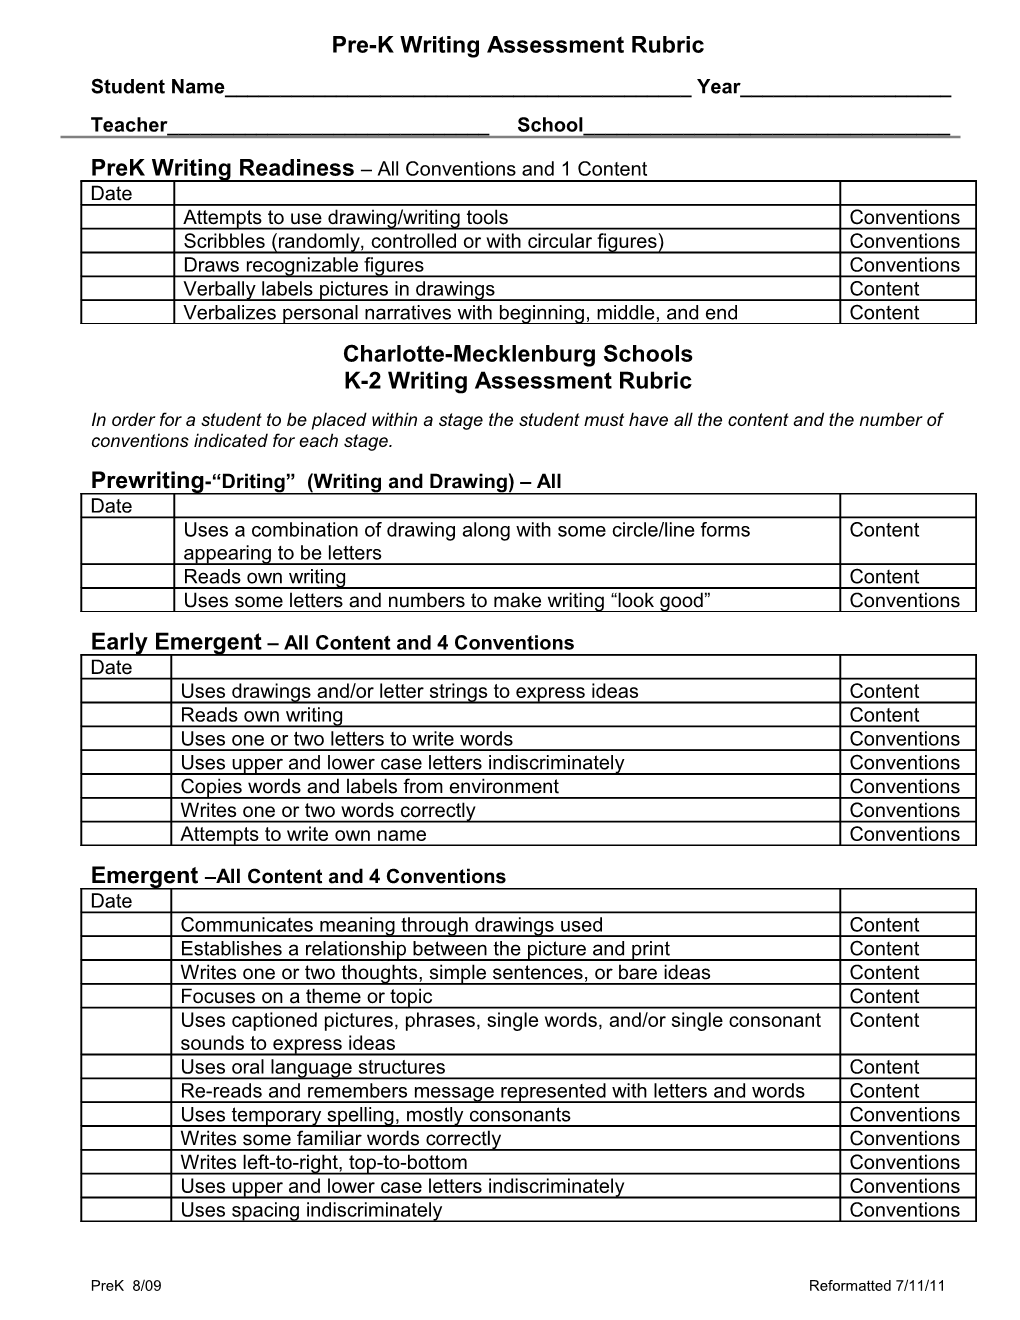 Pre-K Writing Assessment Rubric